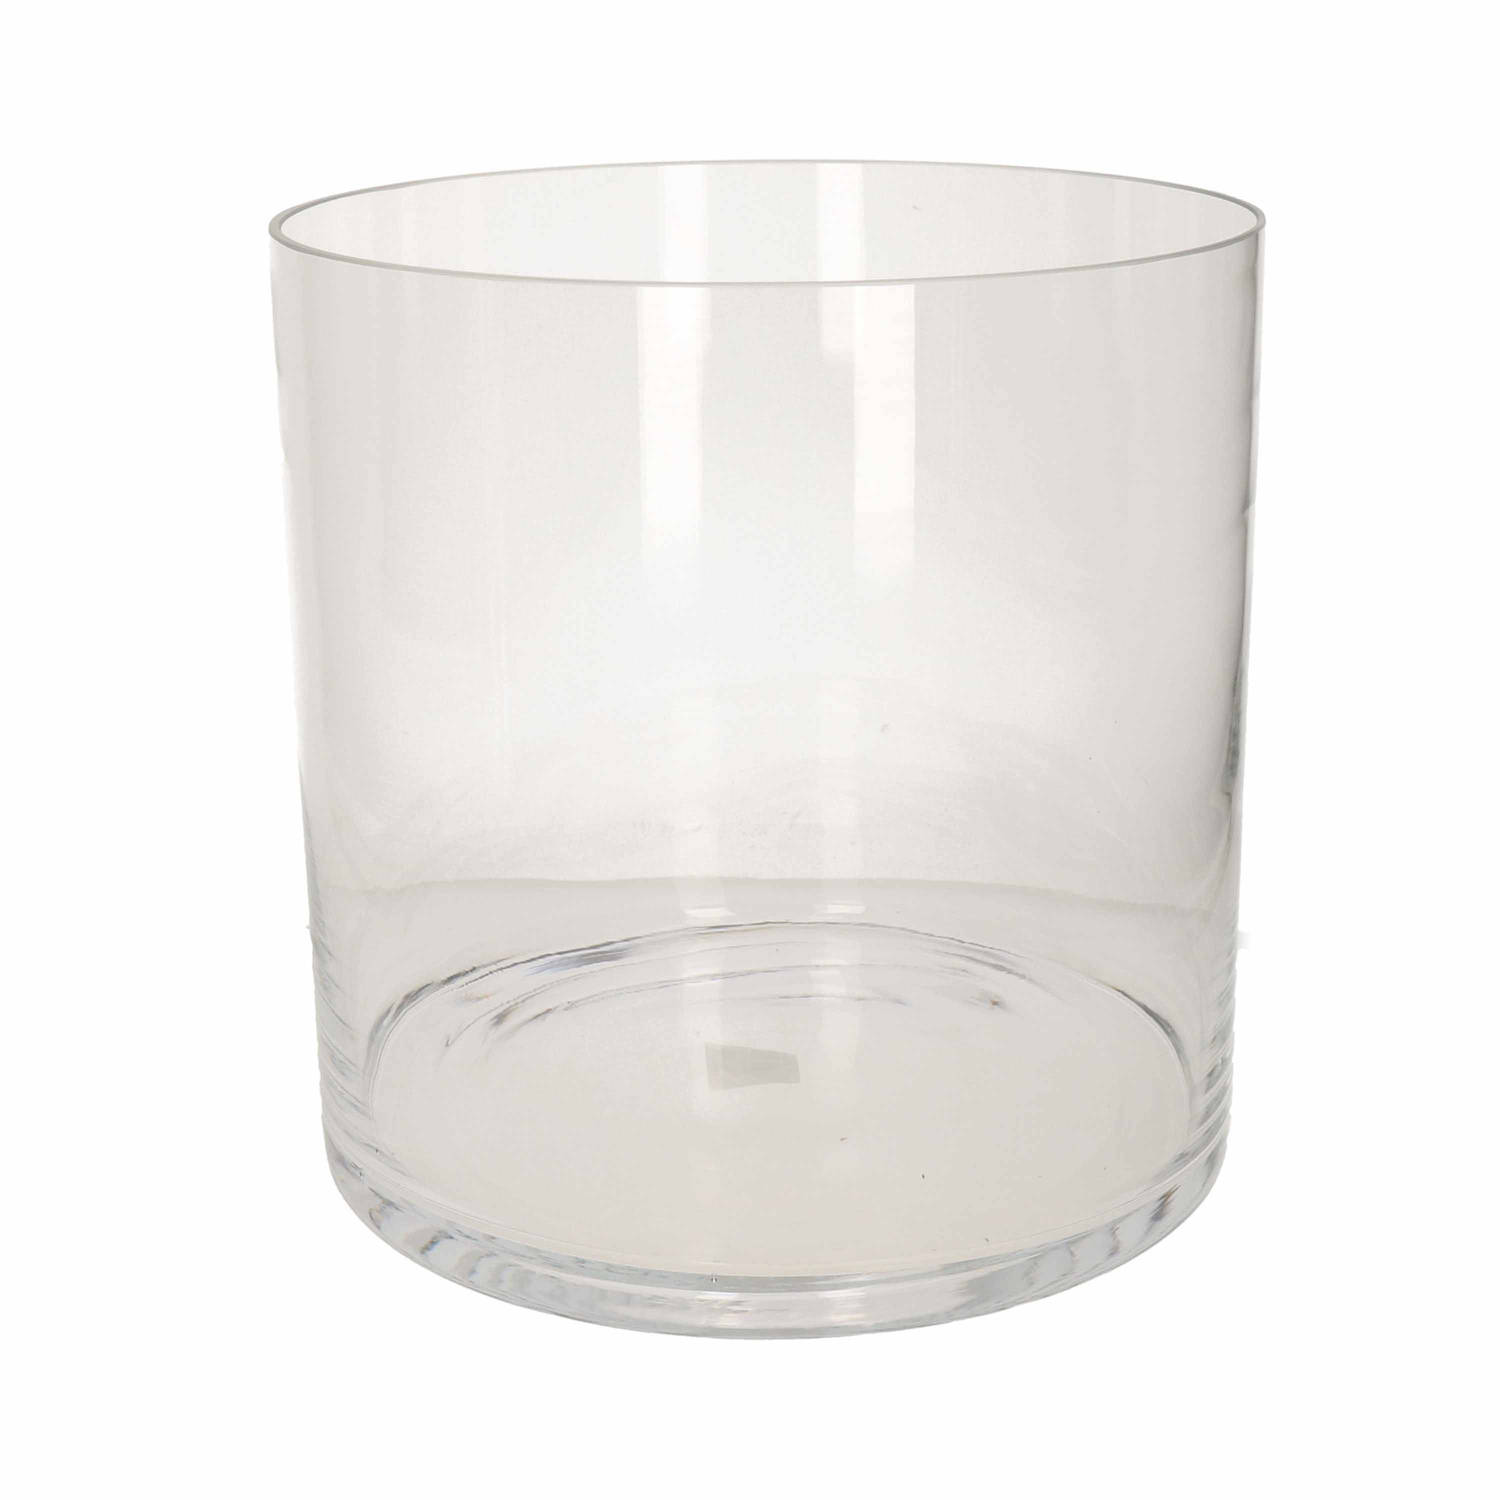 Hakbijl Glass Vaas home basics cilinder glas transparant 30 cm